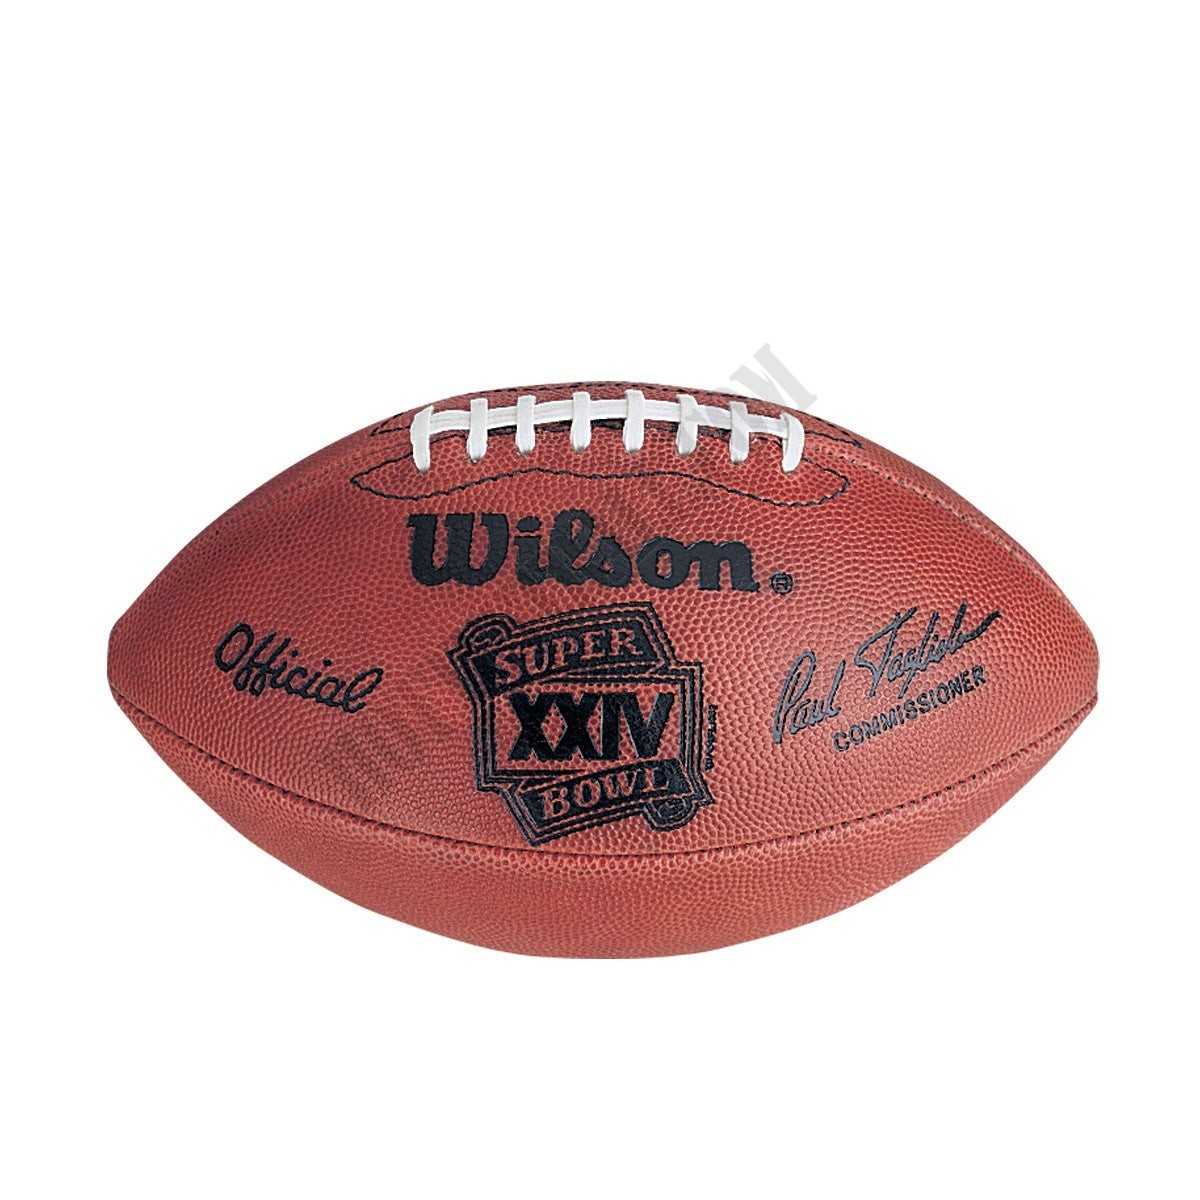 Super Bowl XXIV Game Football - San Francisco 49ers ● Wilson Promotions - Super Bowl XXIV Game Football - San Francisco 49ers ● Wilson Promotions